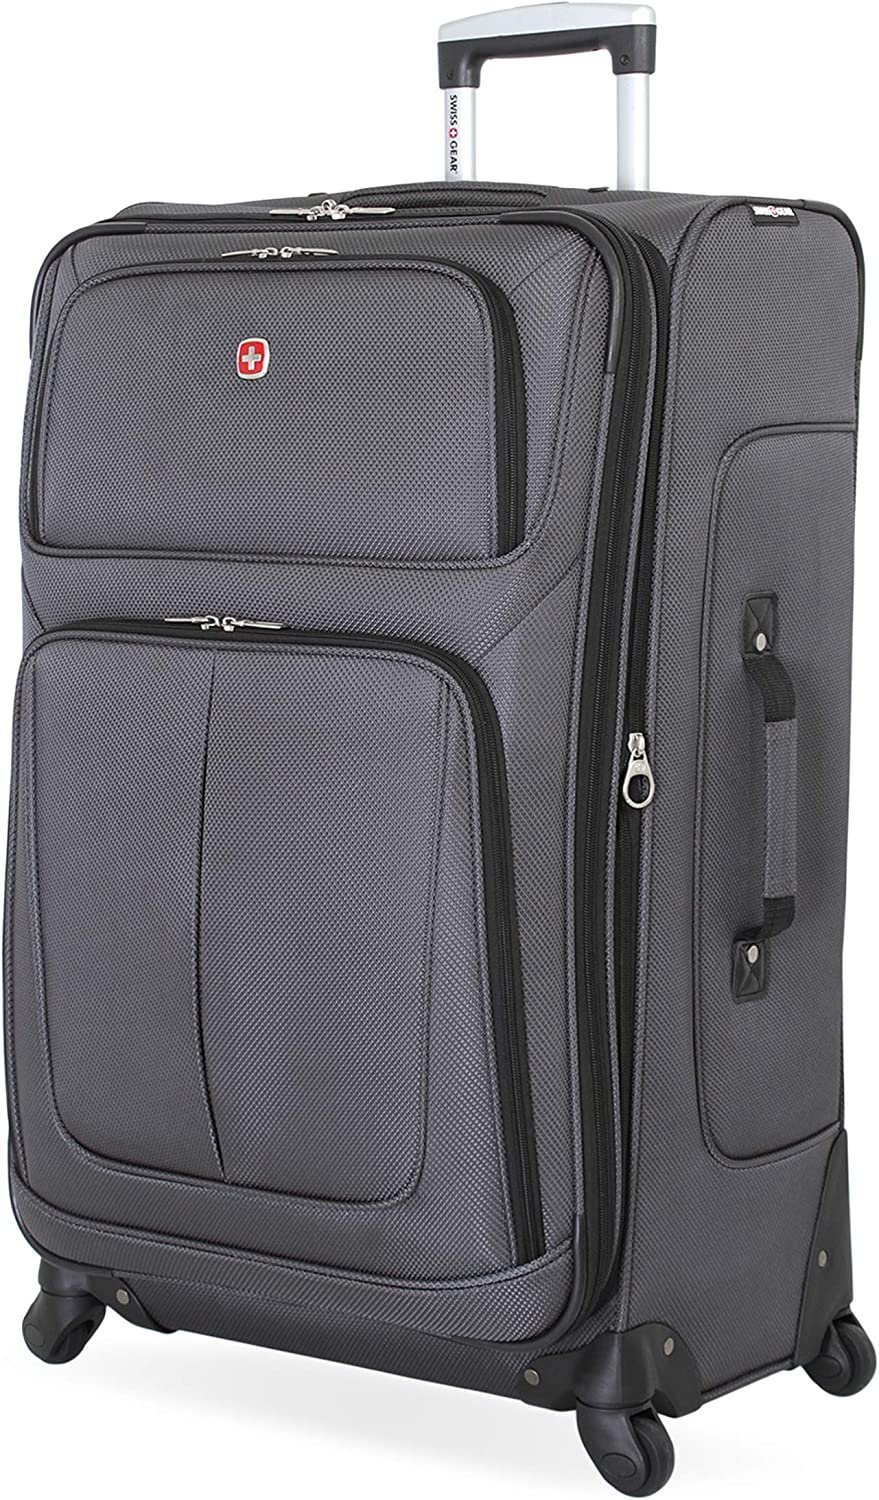 SwissGear Multi-Directional Rolling Suitcase, 29-Inch